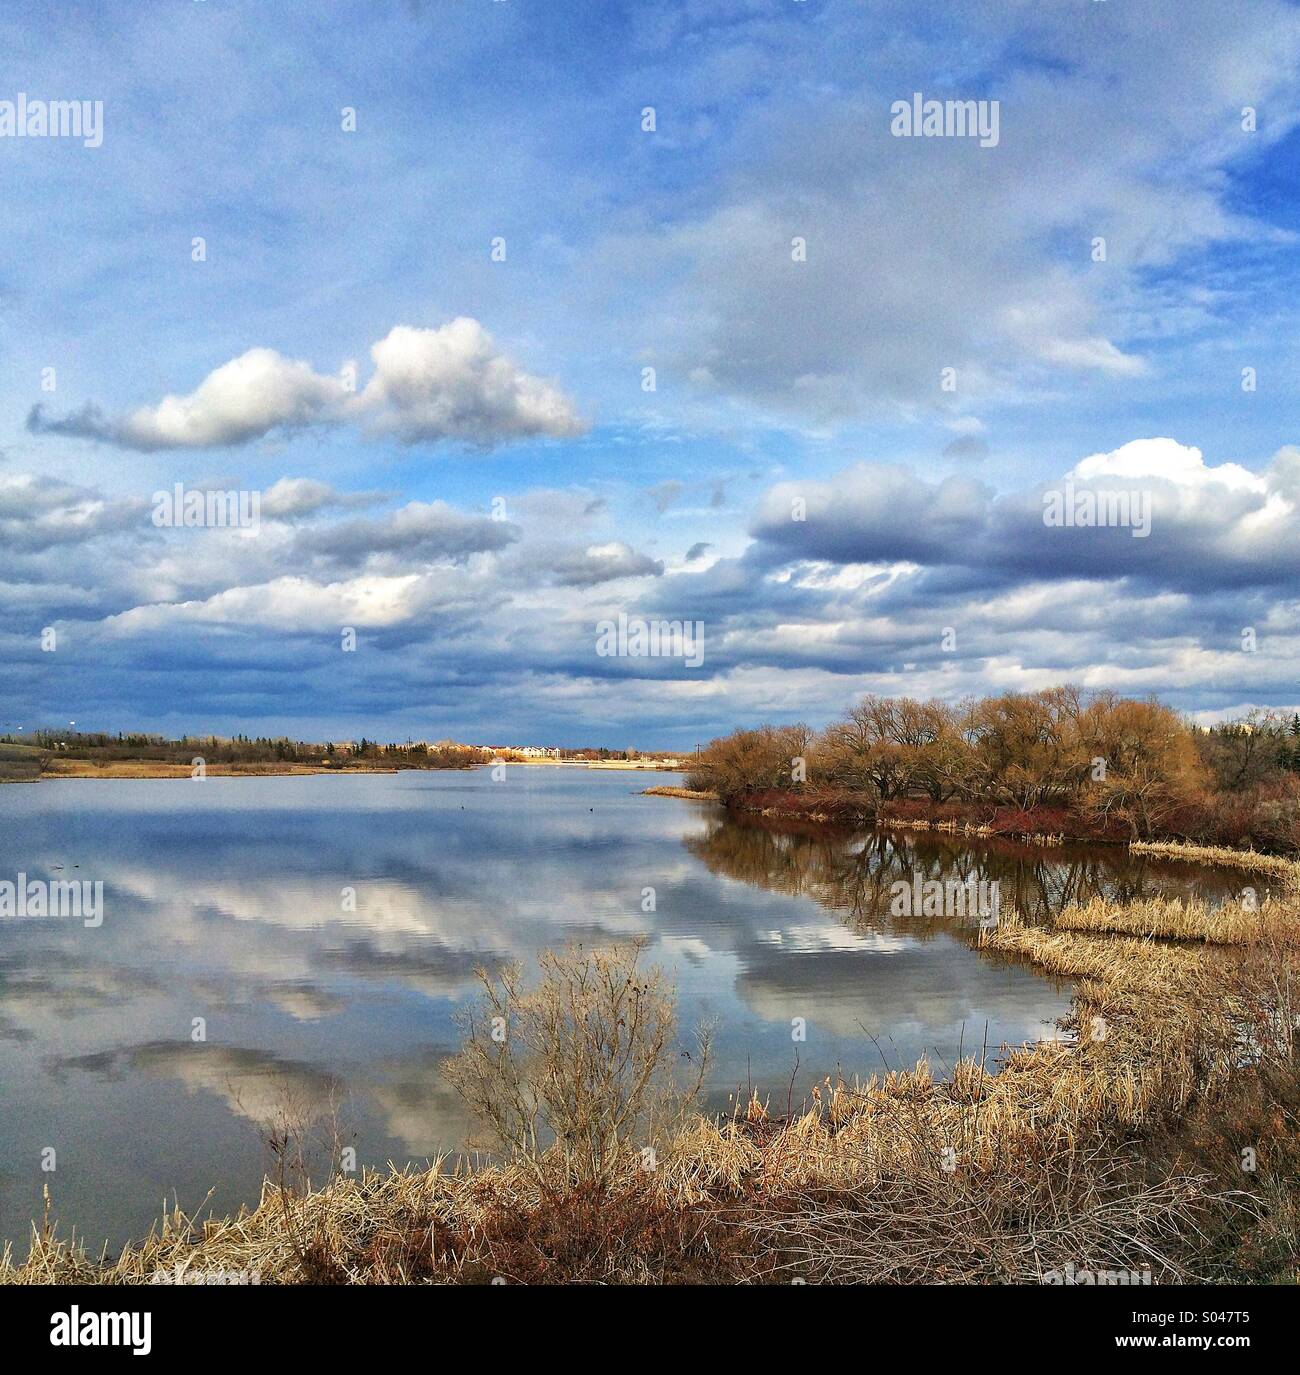 Clouds reflection on wascana lake Stock Photo